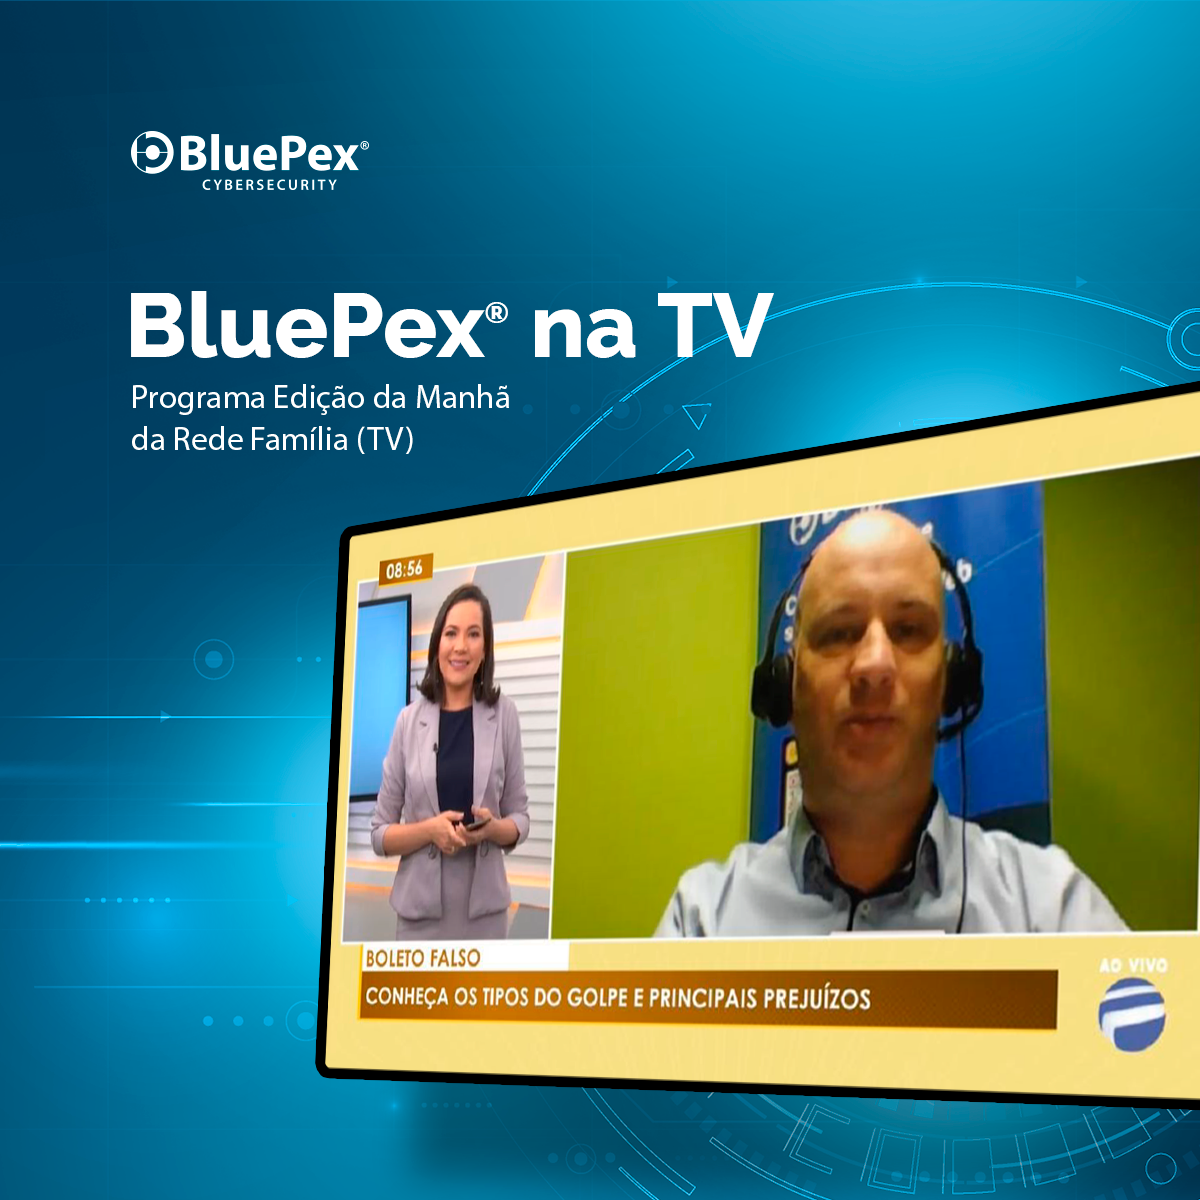 BluePex® Vai a TV para Auxiliar no Combate a Fraude dos Boletos.